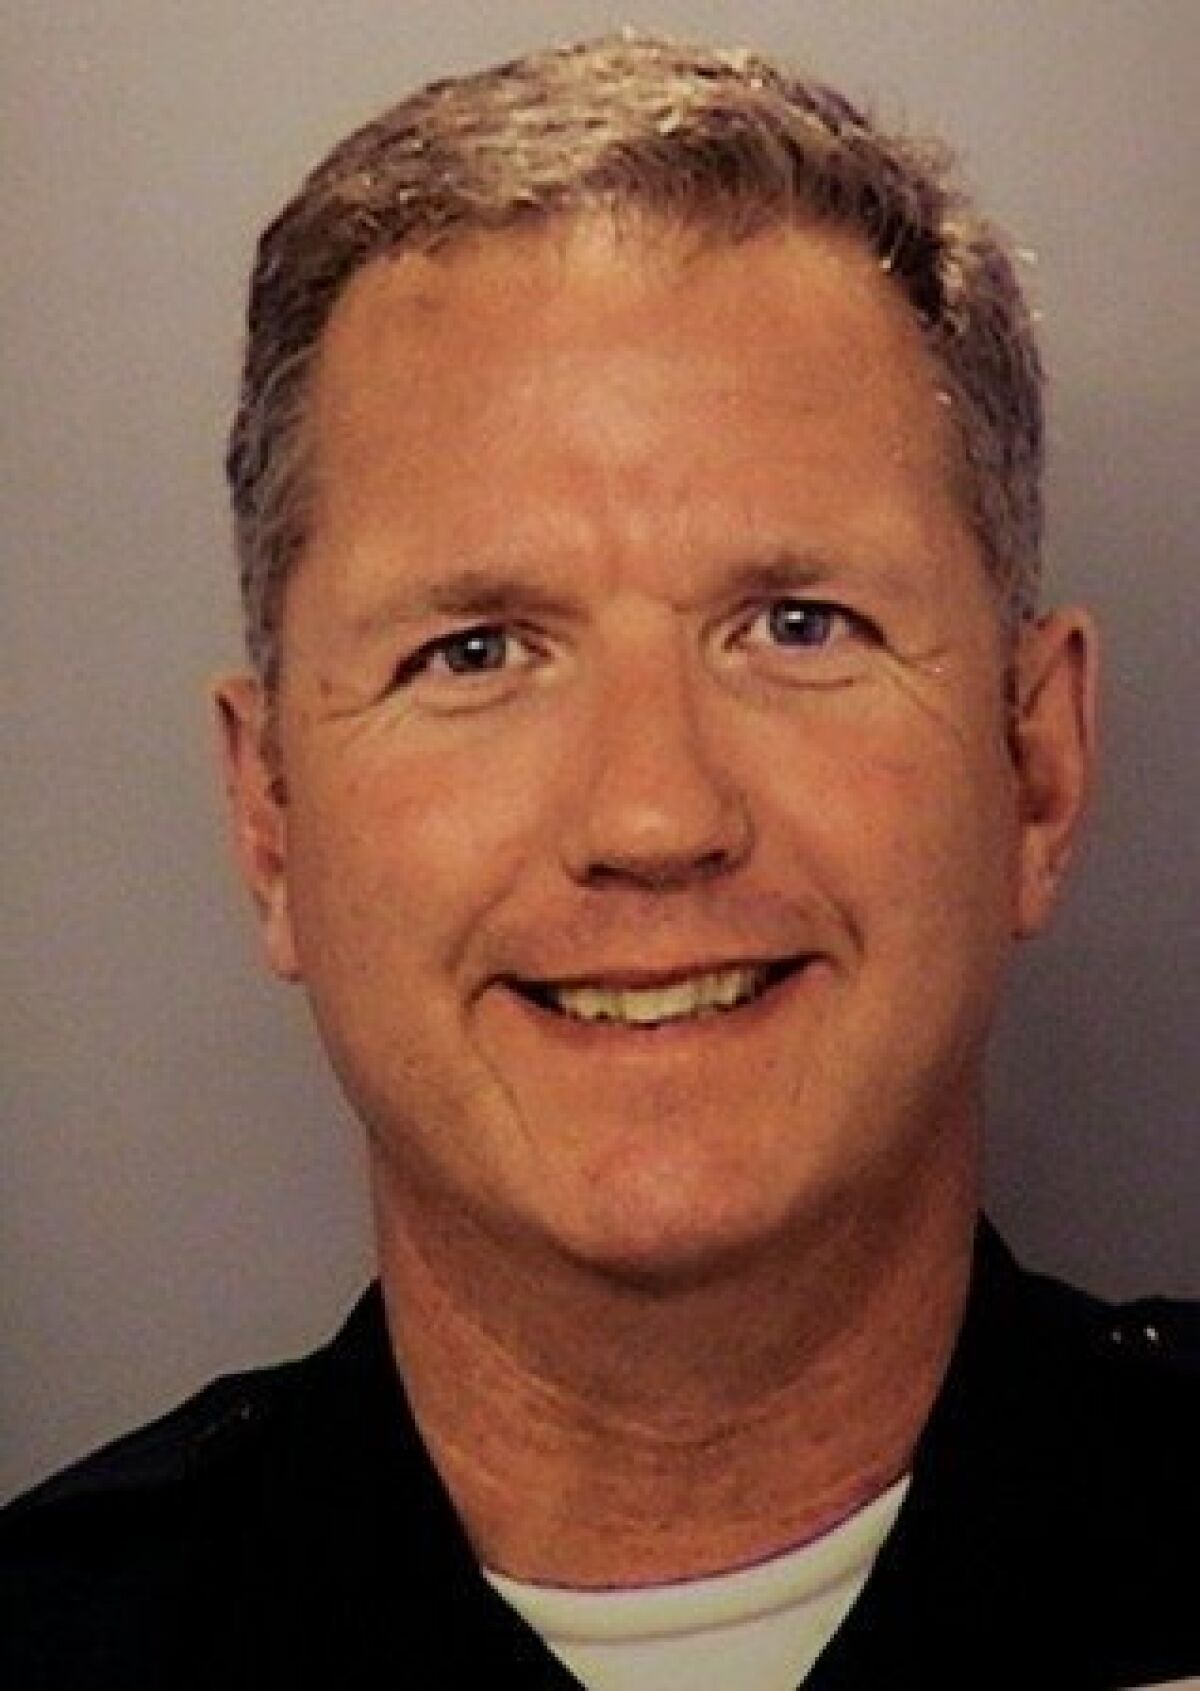 Officer Christopher Wilson was fatally shot Oct. 27, 2010.